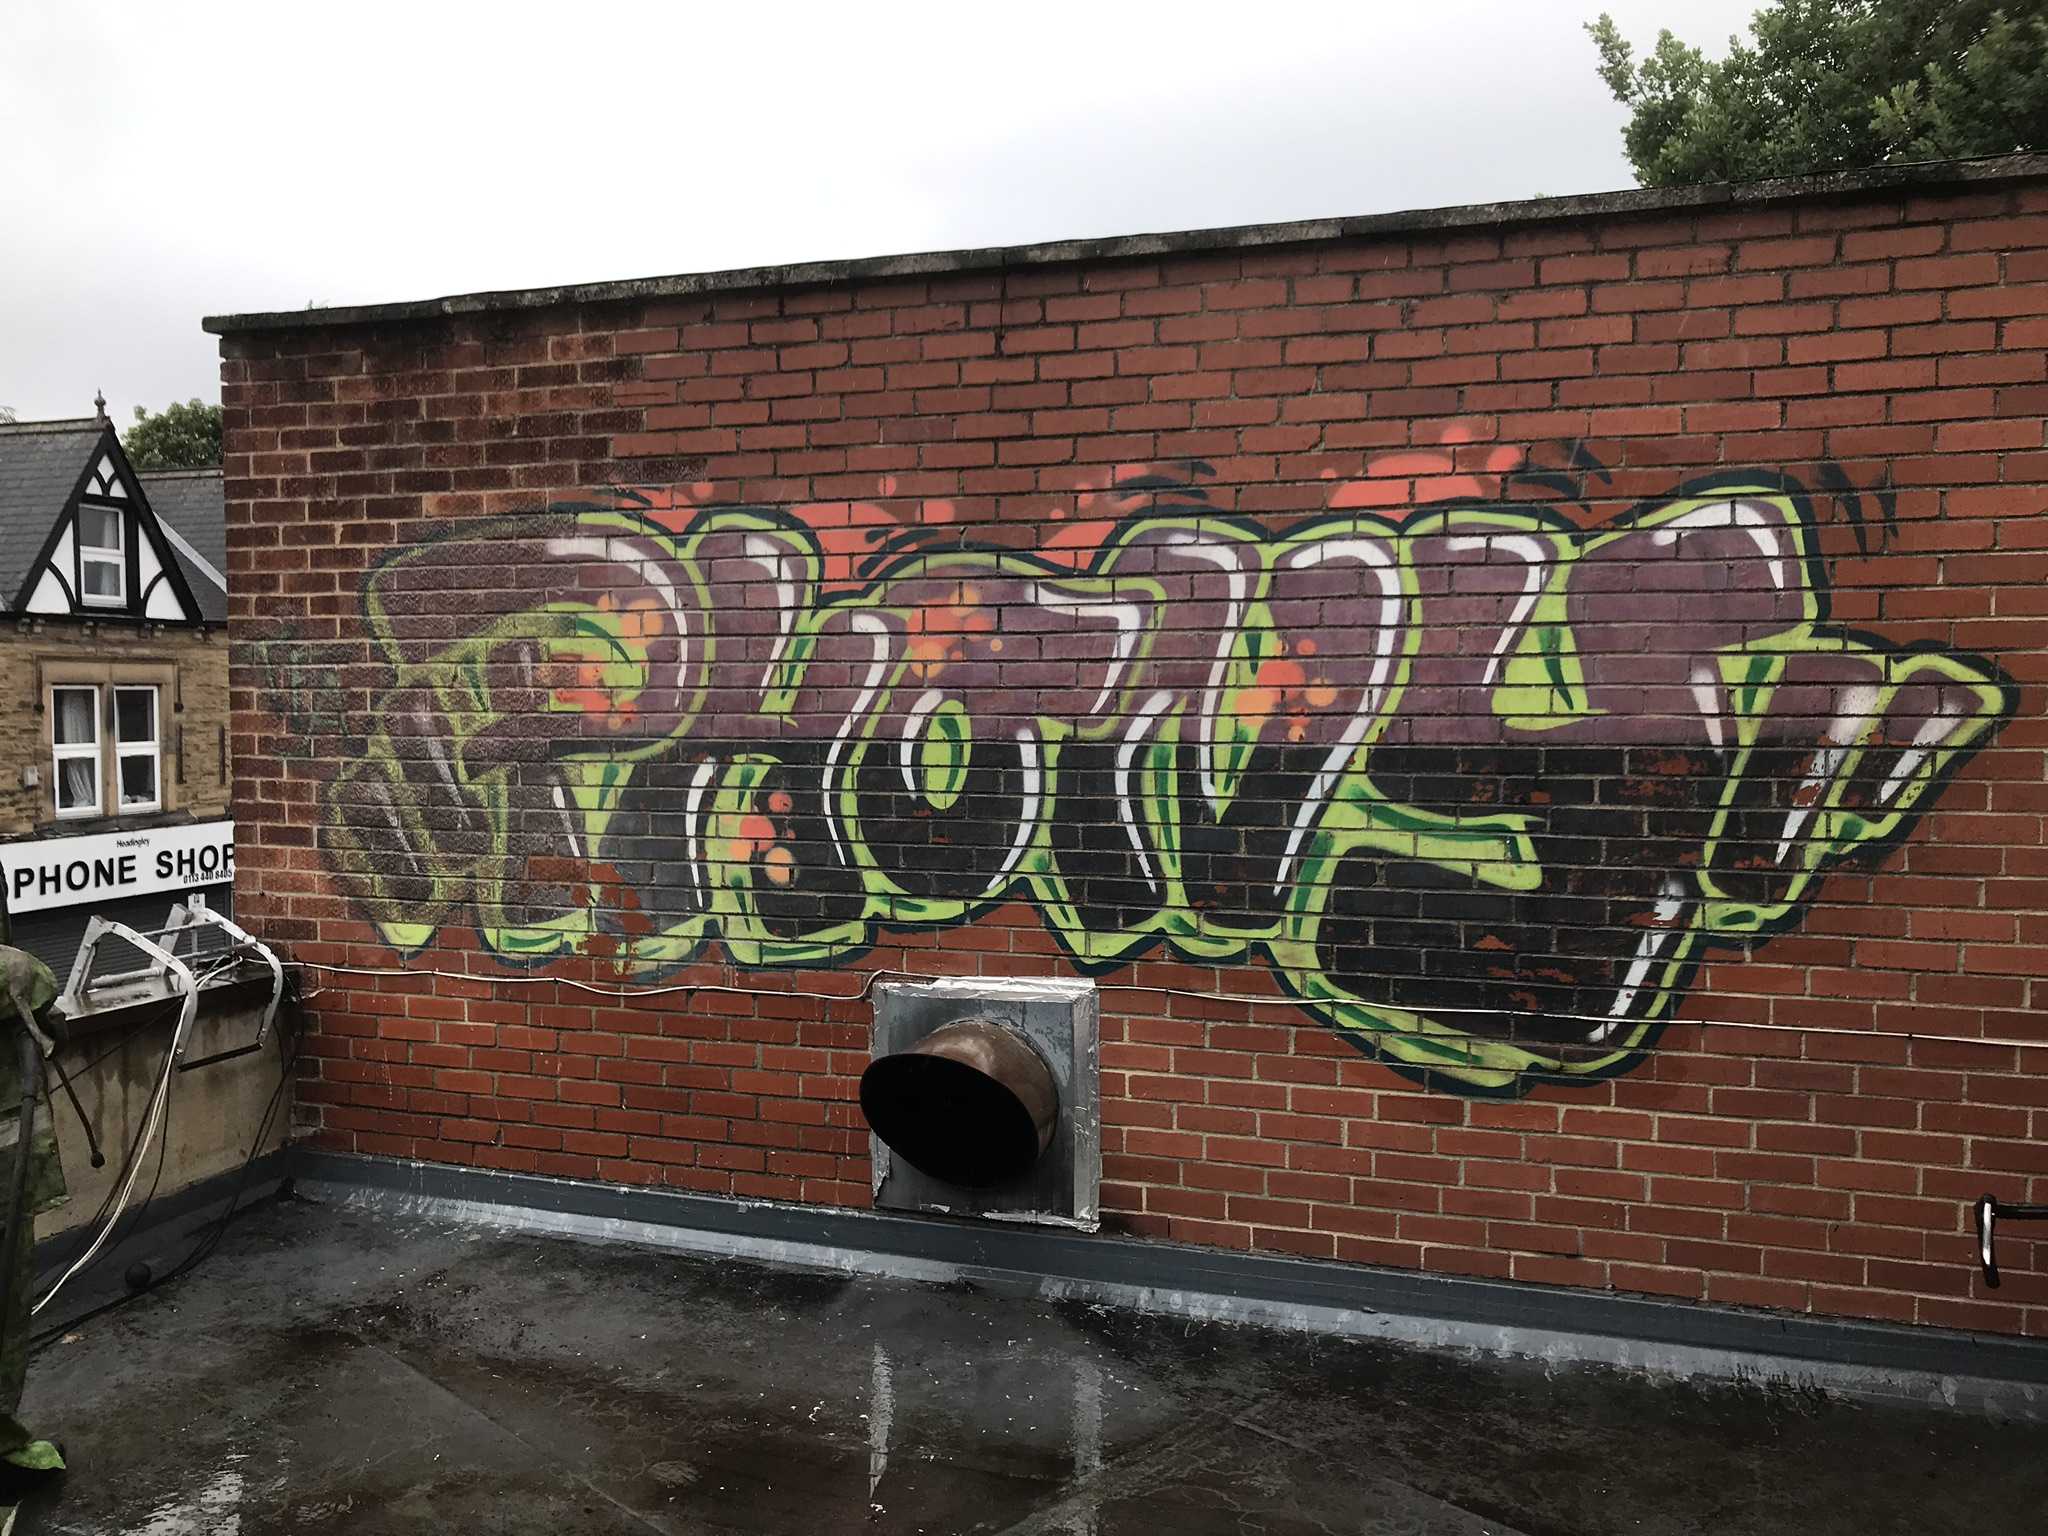 Graffiti on Brickwork